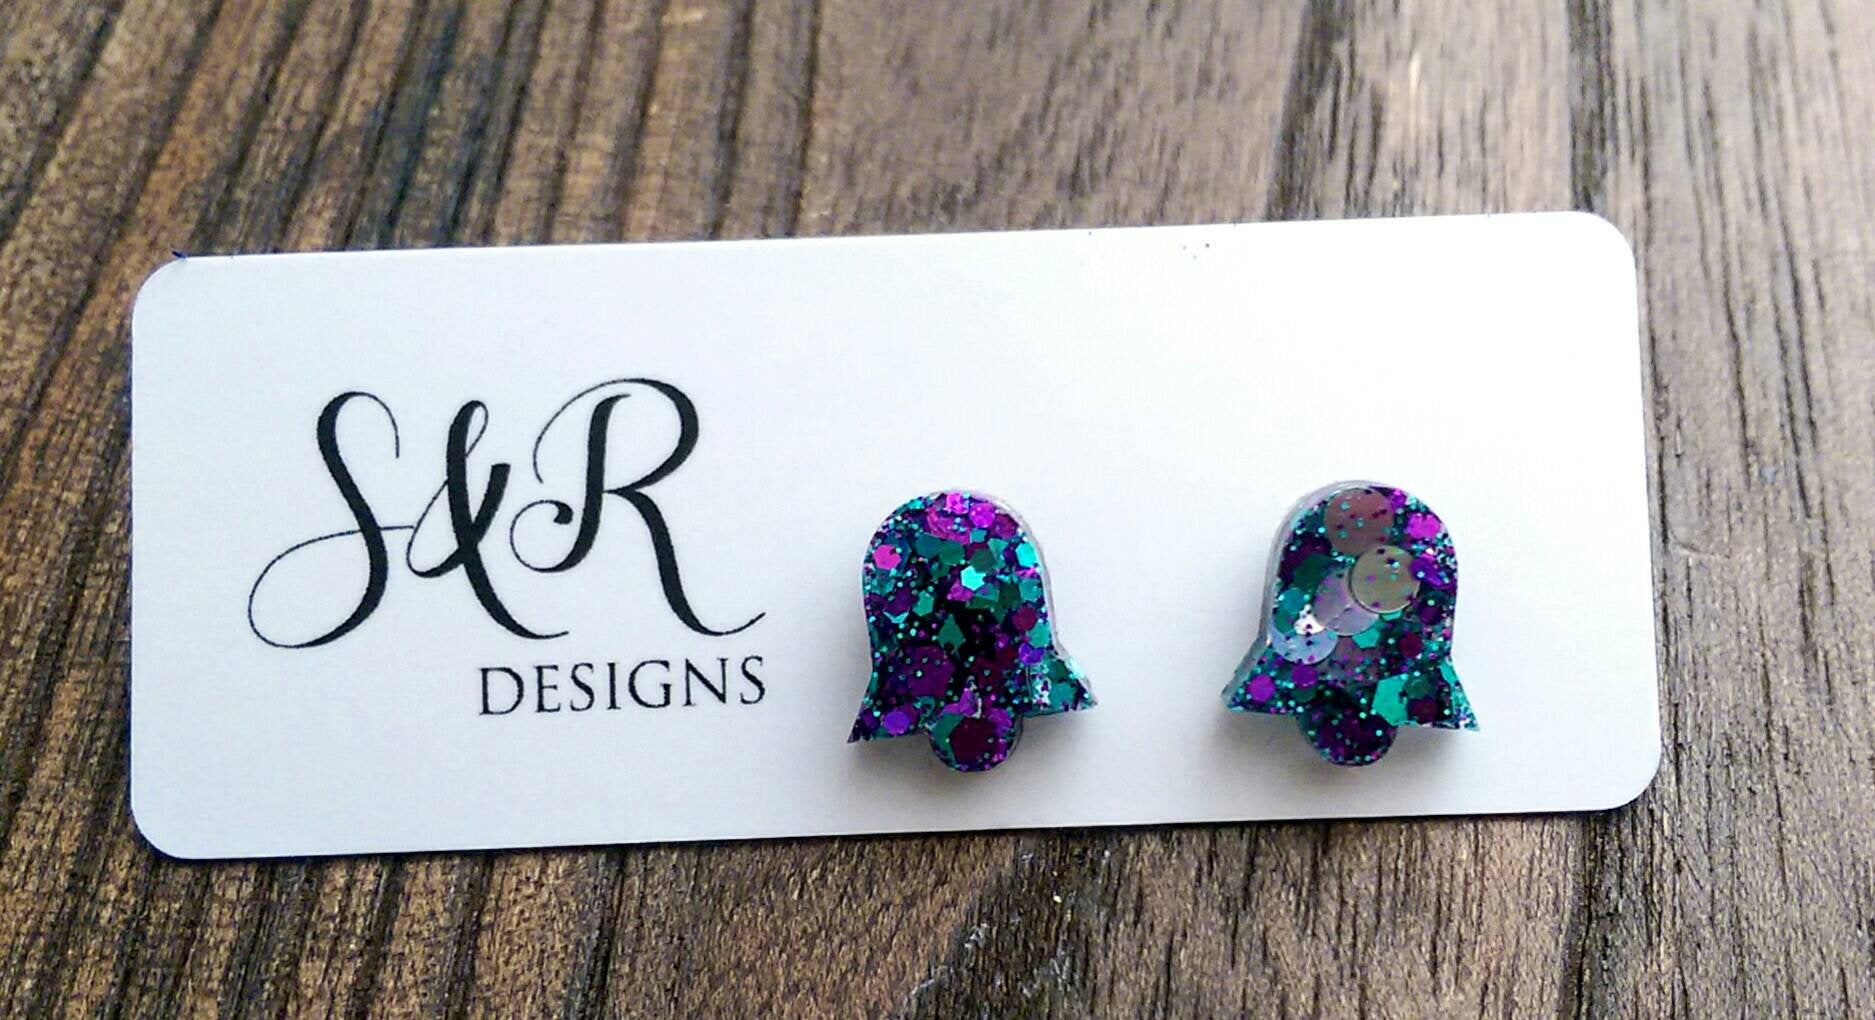 Bell Flower Resin Stud Earrings, Silver Purple Teal Glitter Earrings. Stainless Steel Stud Earrings. - Silver and Resin Designs